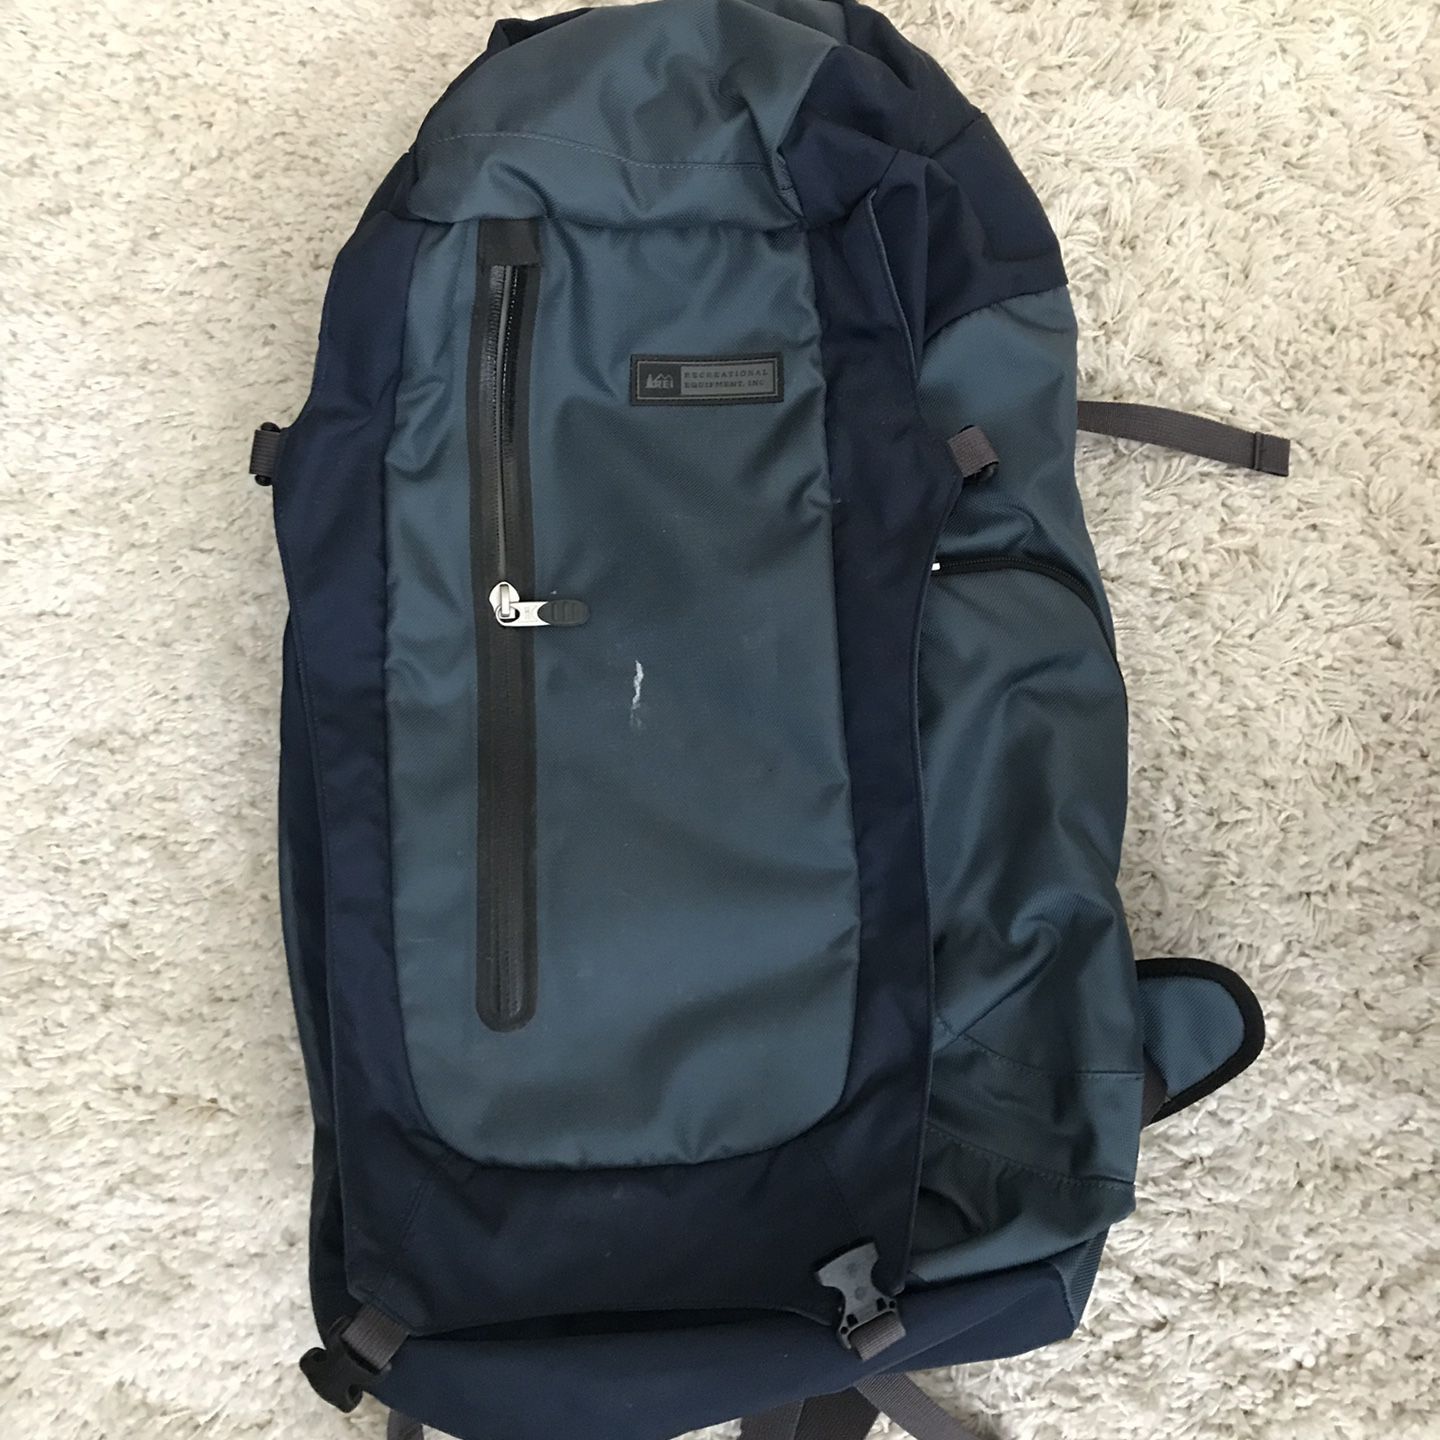 REI vagabond backpack